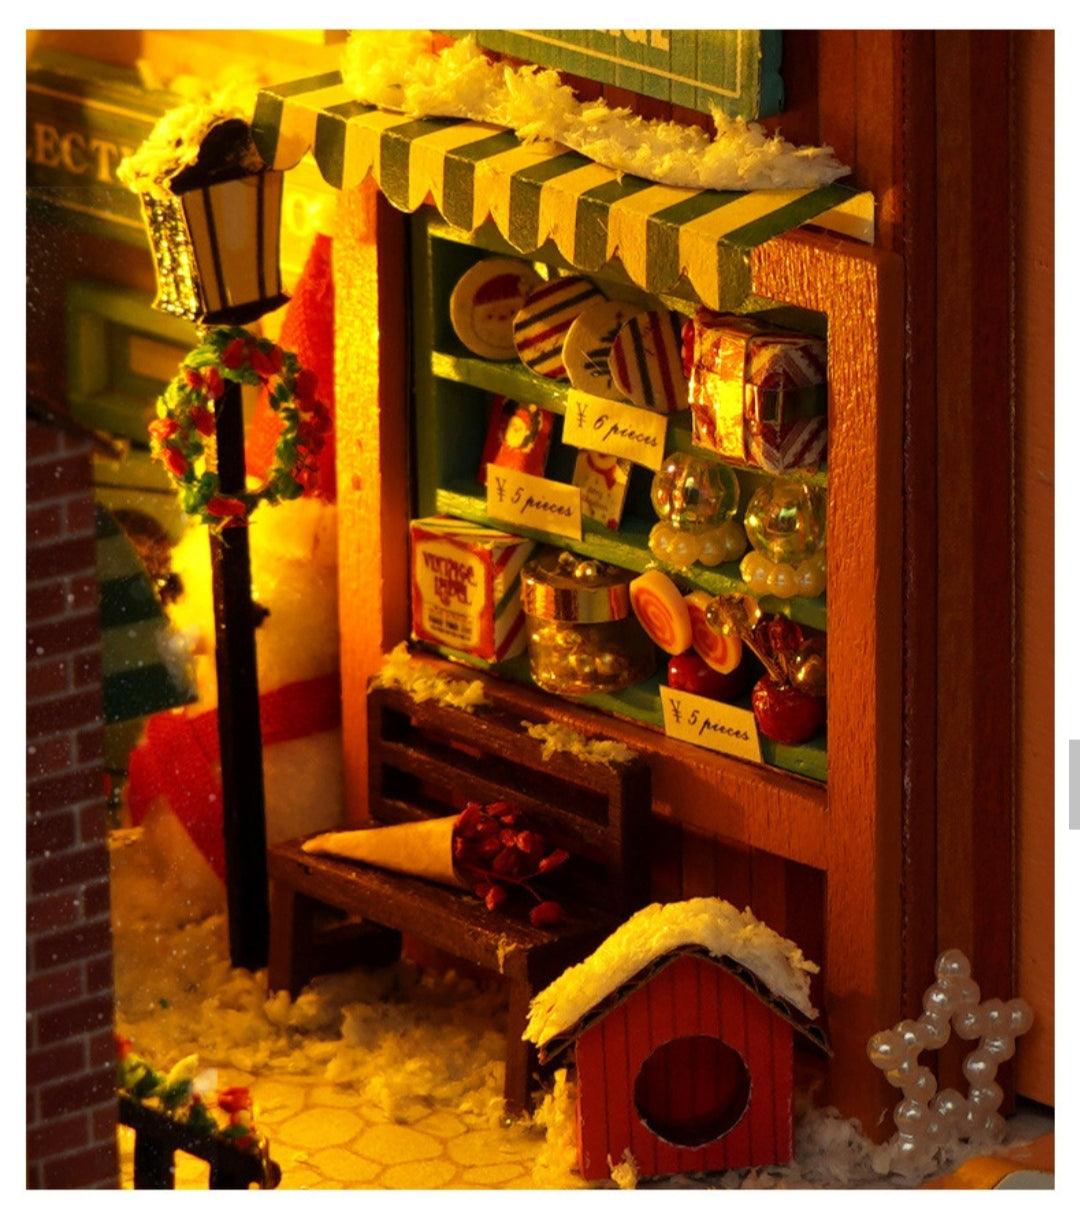 Christmas Book Nook Kit Christmas Dollhouse Miniature DIY Book Nook Kits Book Corners